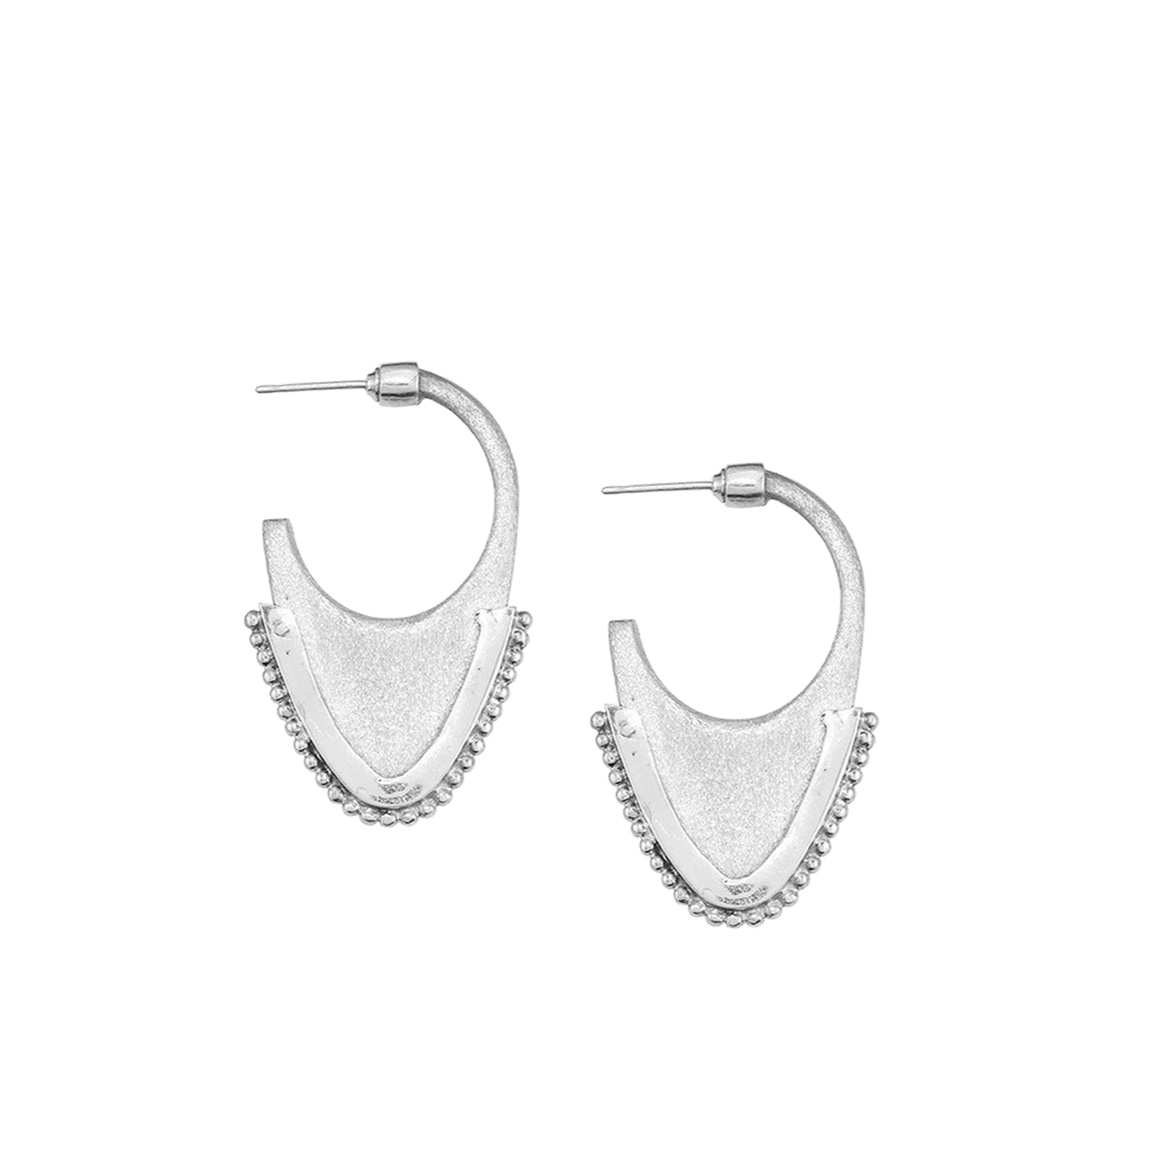 ARTICLE22 Laos Tribal Dome Earrings  | Earrings | Australian Jewellery | Jewellery Store | Jewellery shops | Online Jewellery | Gifts | Presents | Xmas Presents | Birthday Present | Wedding Gift | Silver Earrings | Upcycle Studio